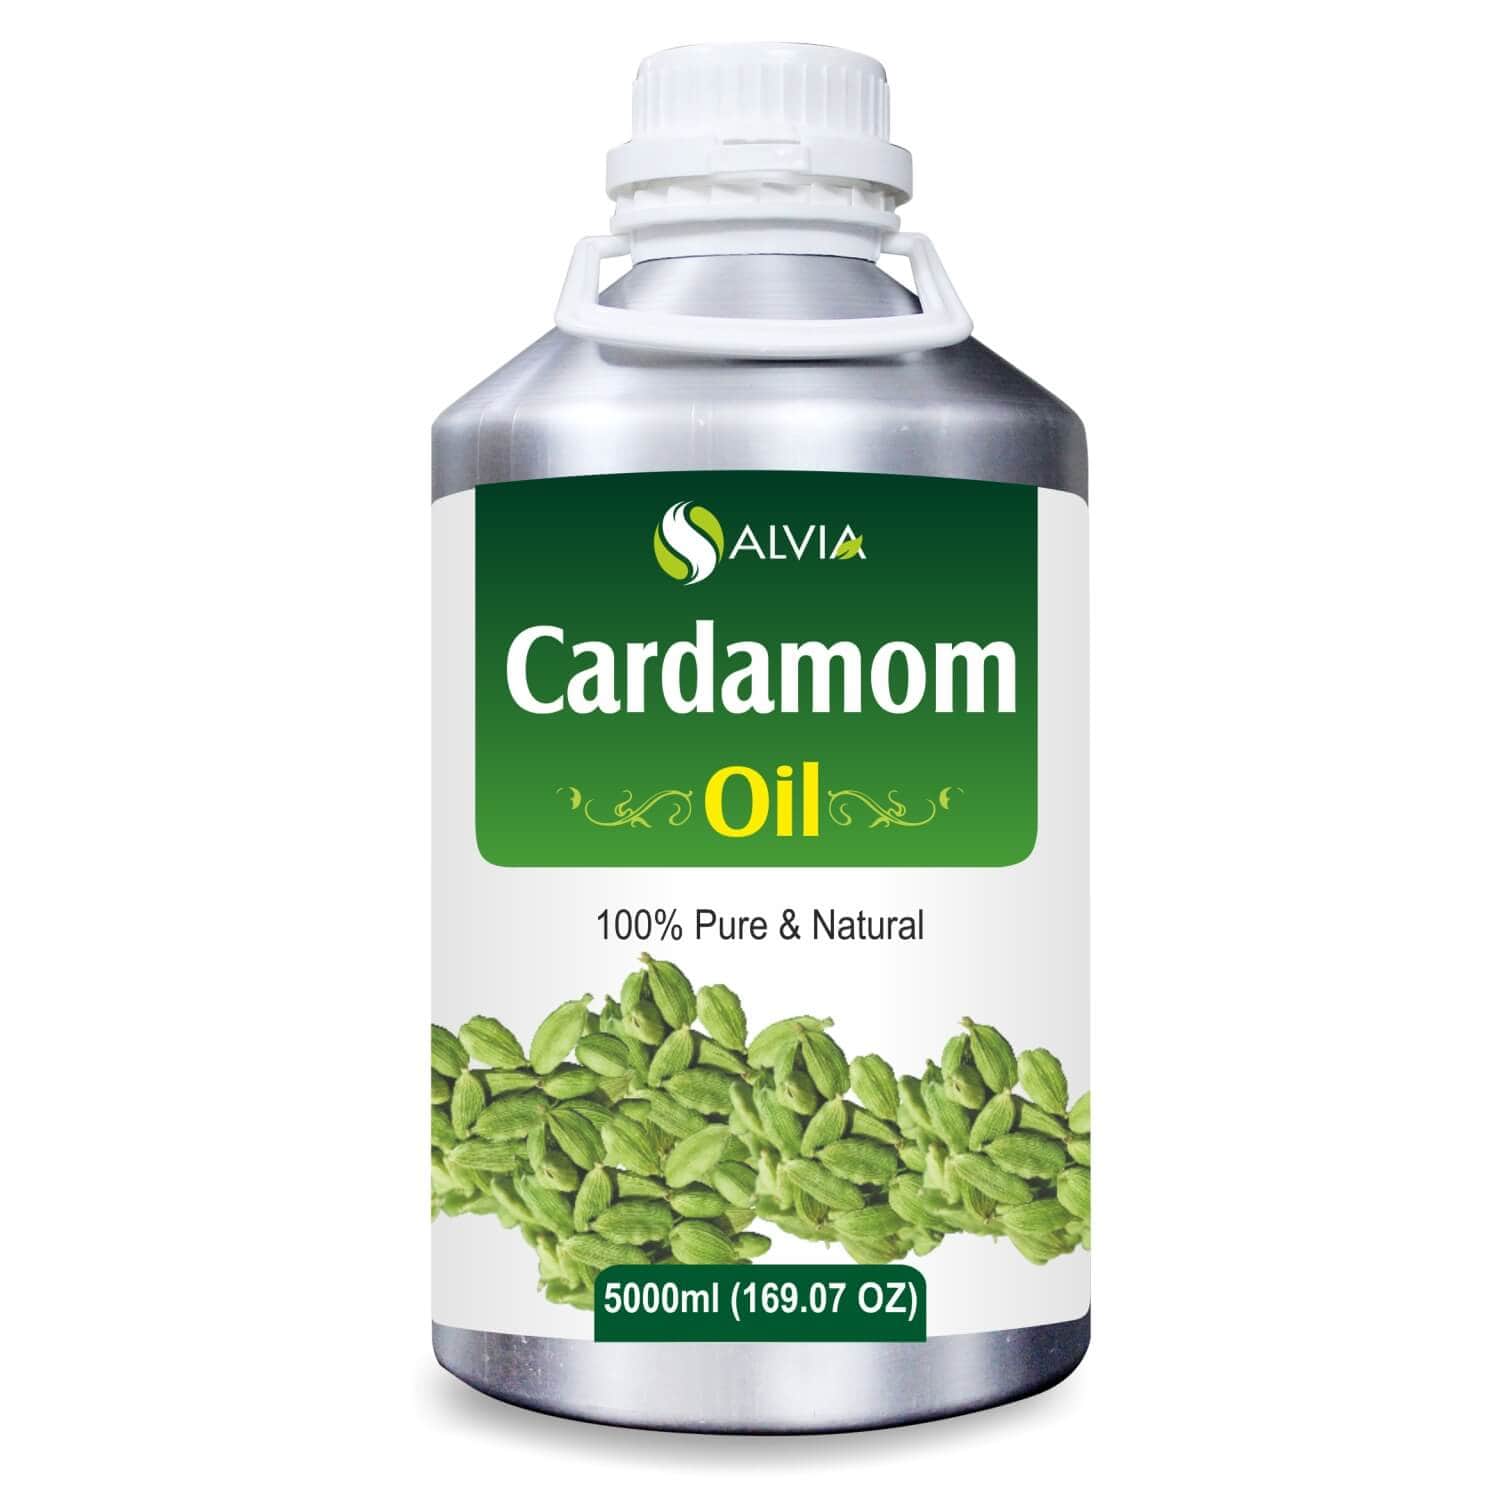 Salvia Natural Essential Oils 5000ml Cardamom Oil (Elettaria cardamomum) 100% Natural Pure Essential Oil